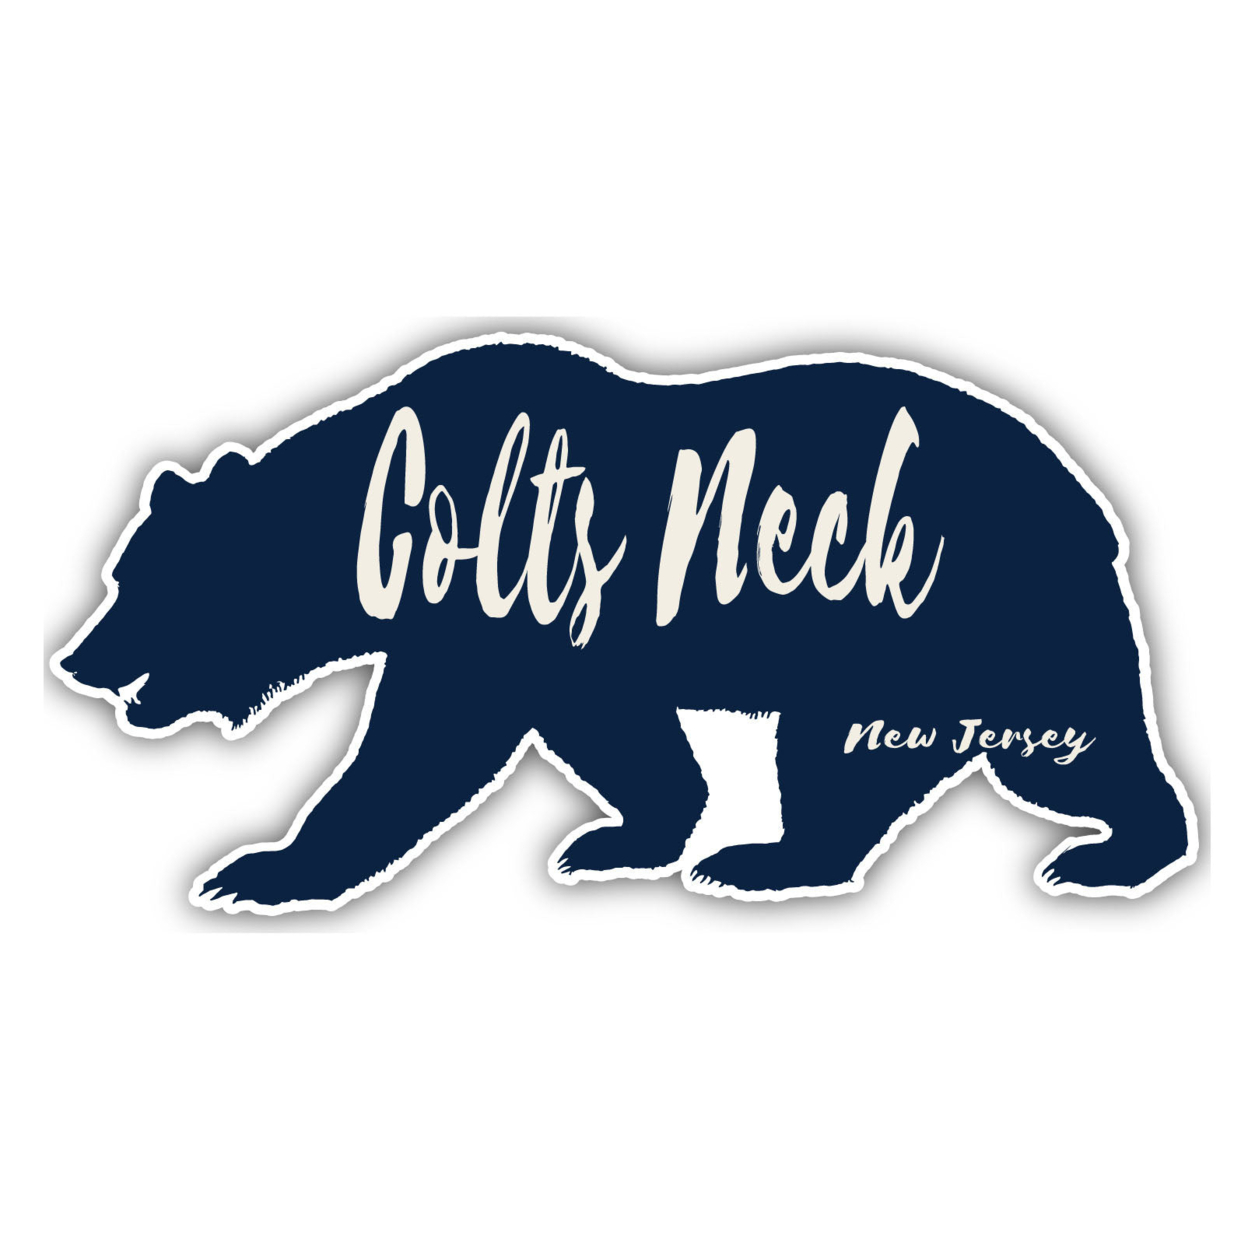 Colts Neck New Jersey Souvenir Decorative Stickers (Choose Theme And Size) - Single Unit, 12-Inch, Bear